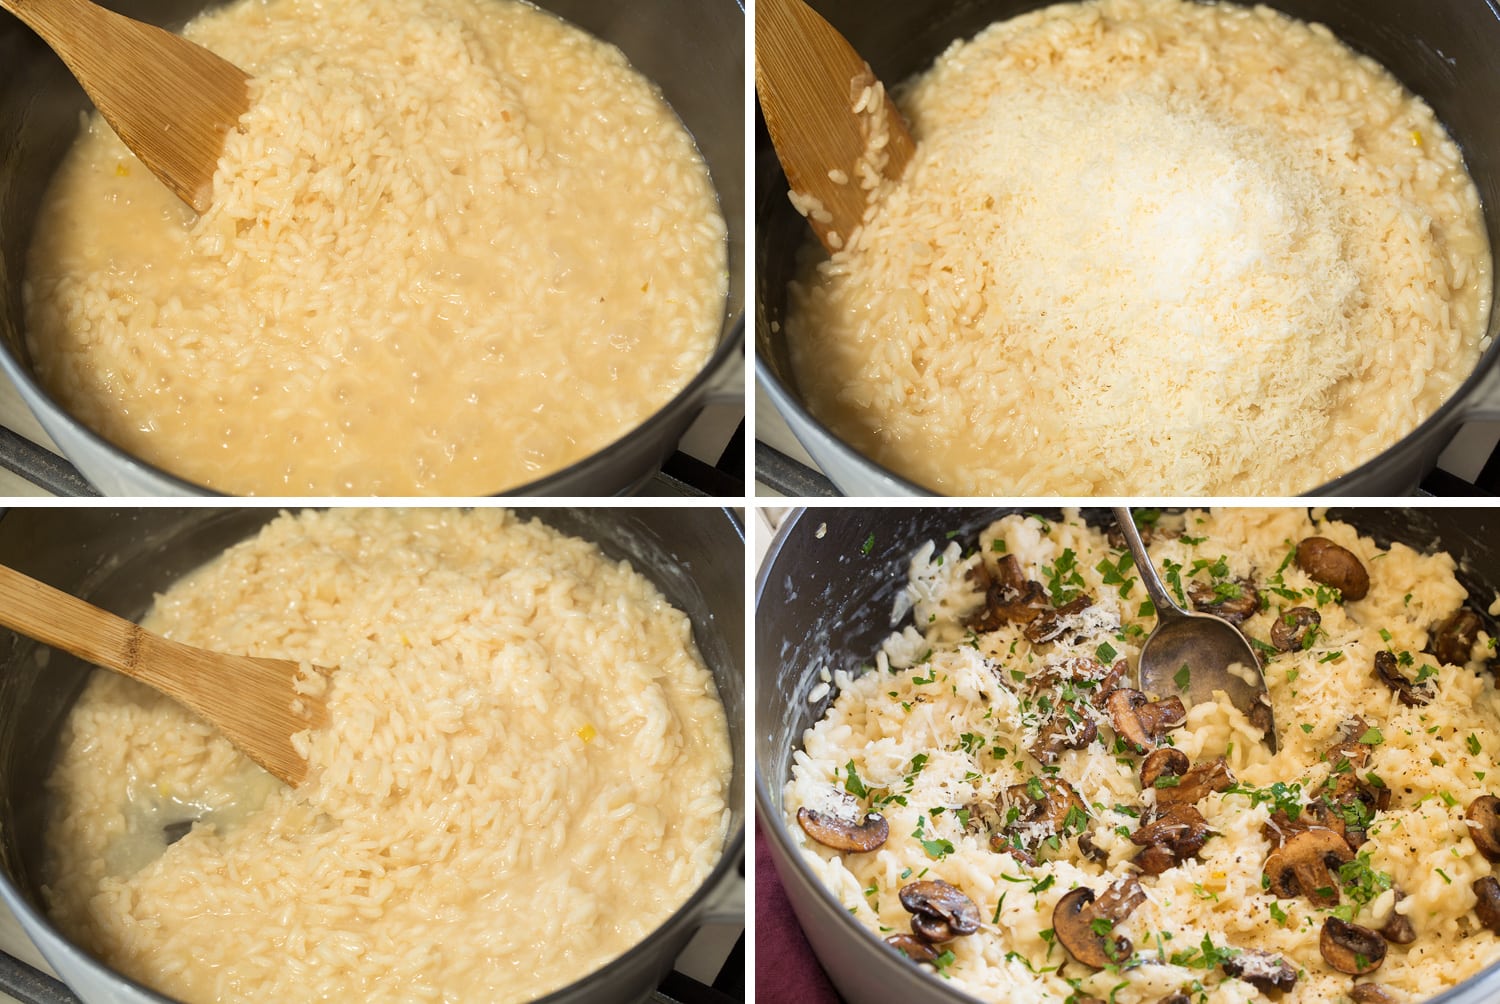 Making risotto with parmesan and mushrooms.